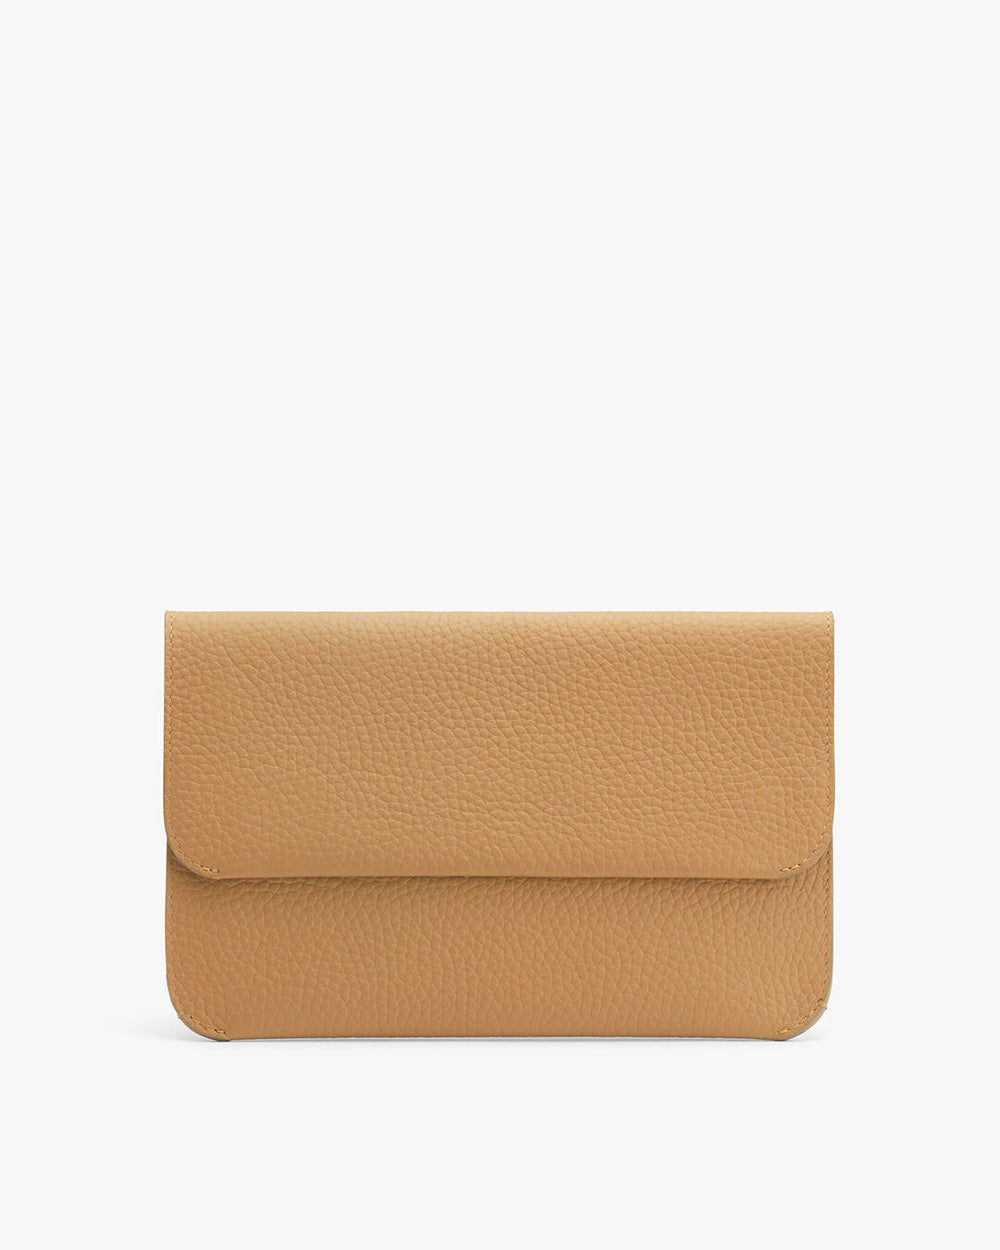 Clutch purse on a plain background